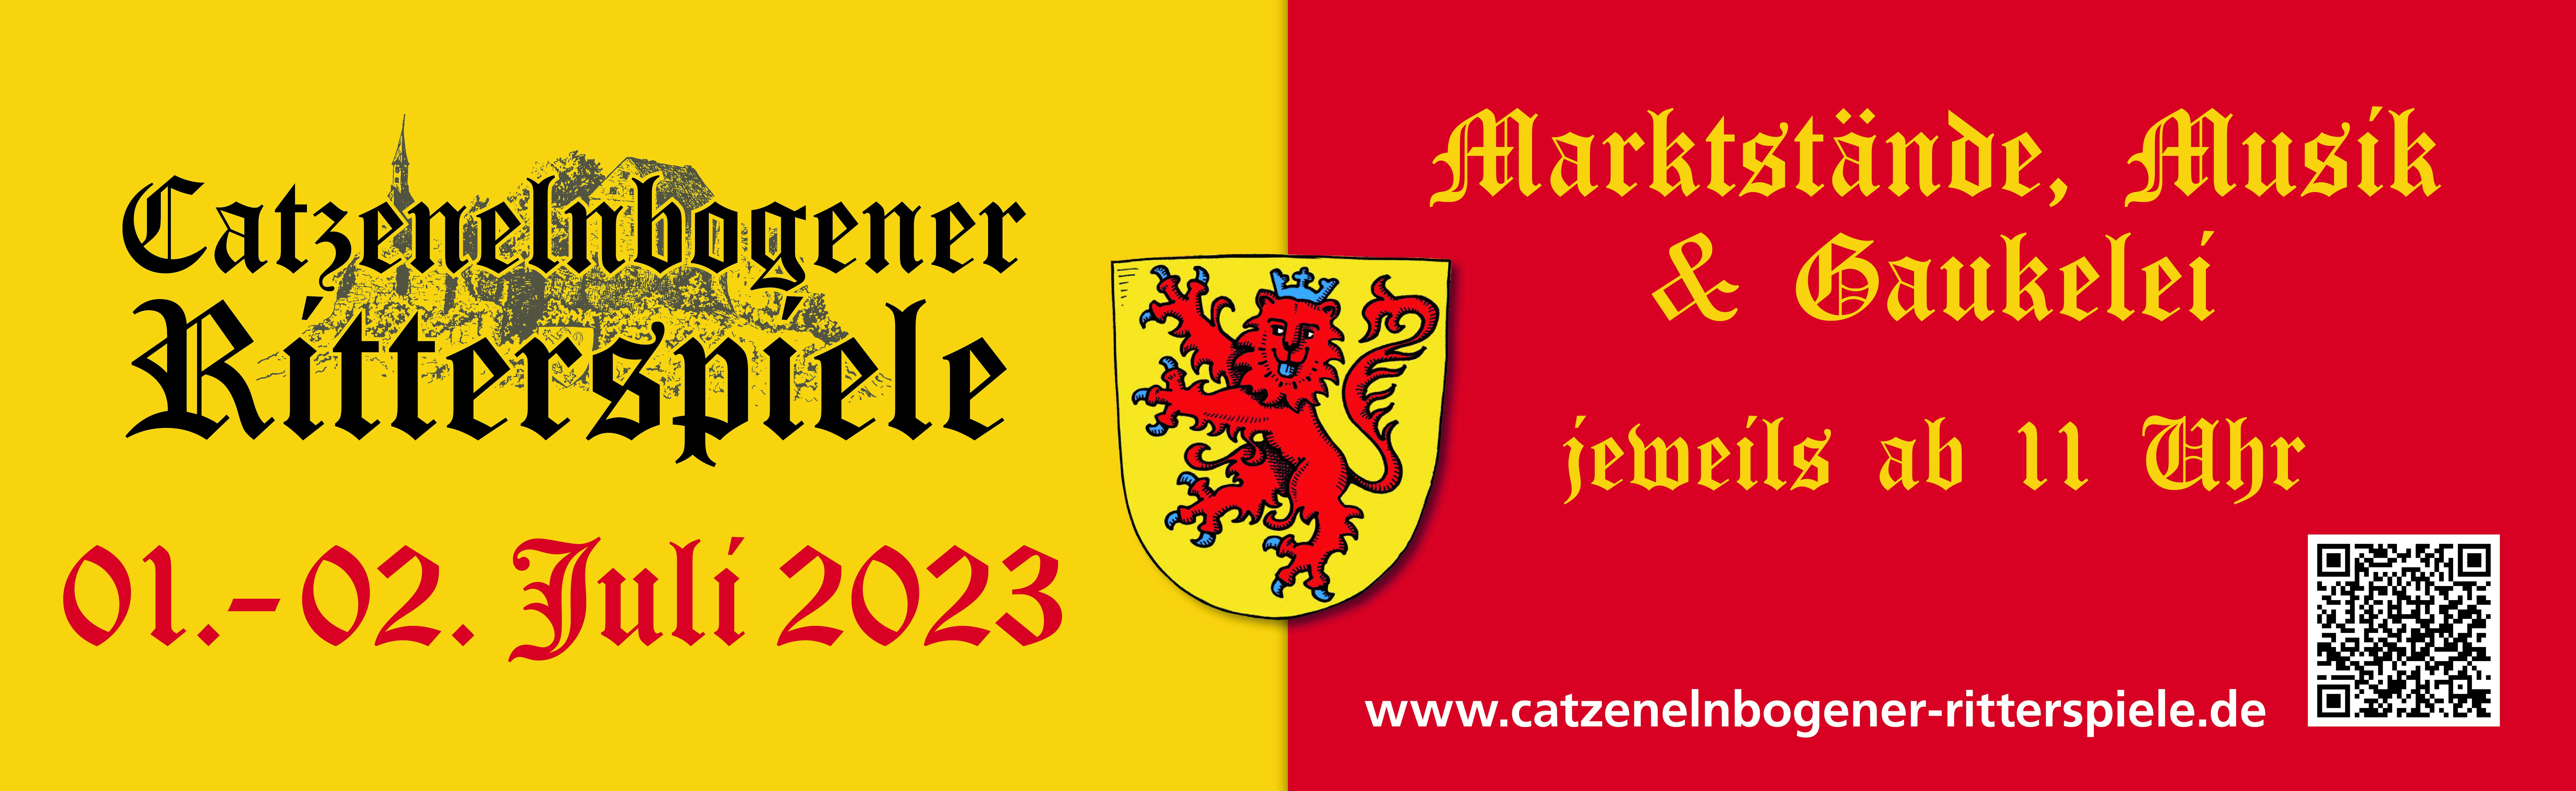 Catzenelnbogener Ritterspiele 2023